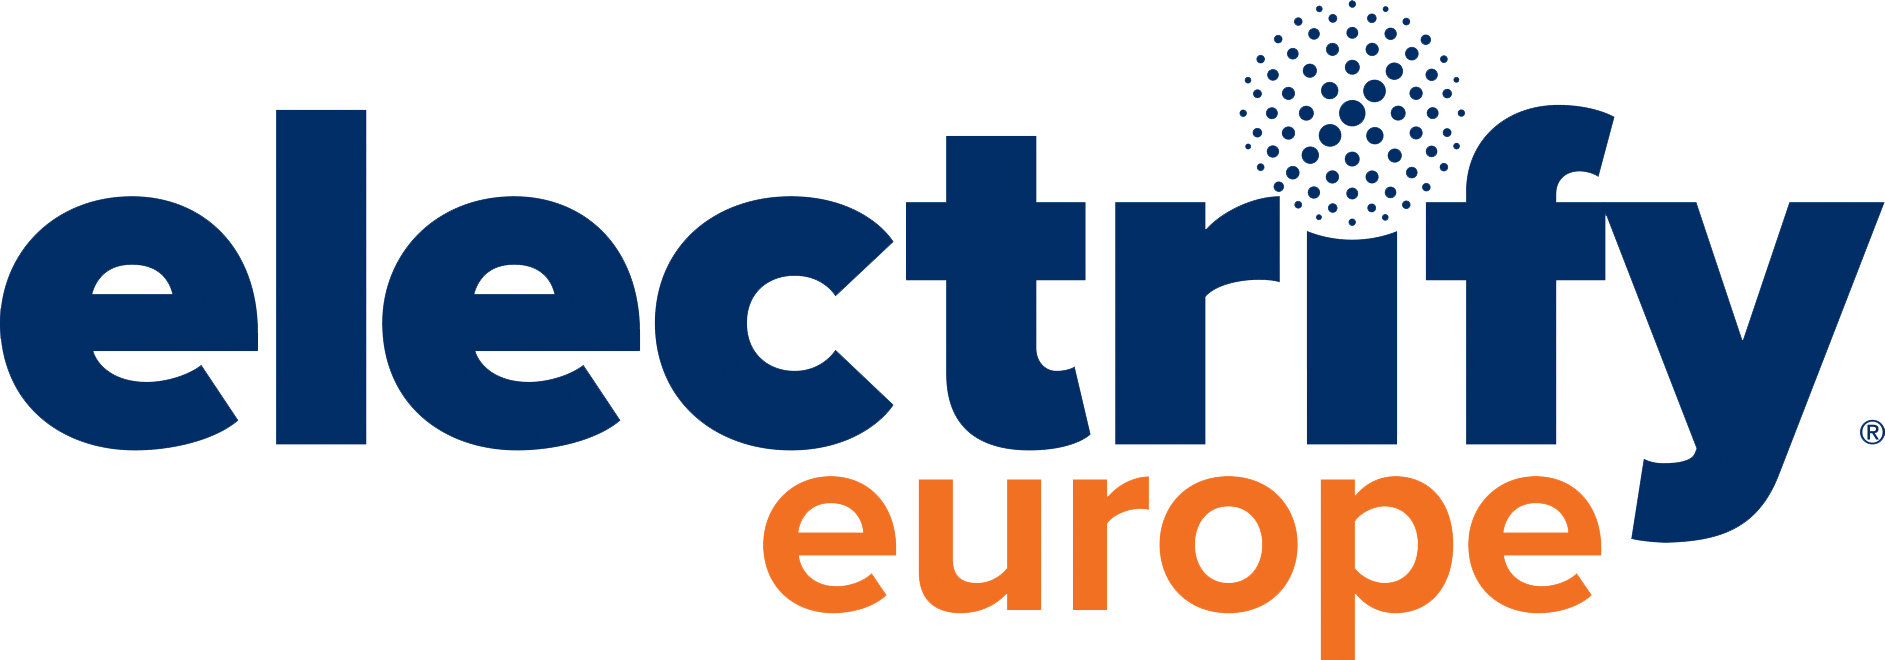 Electrify Europe Expo & Conference, 19-21 Giugno 2018, Vienna, Austria